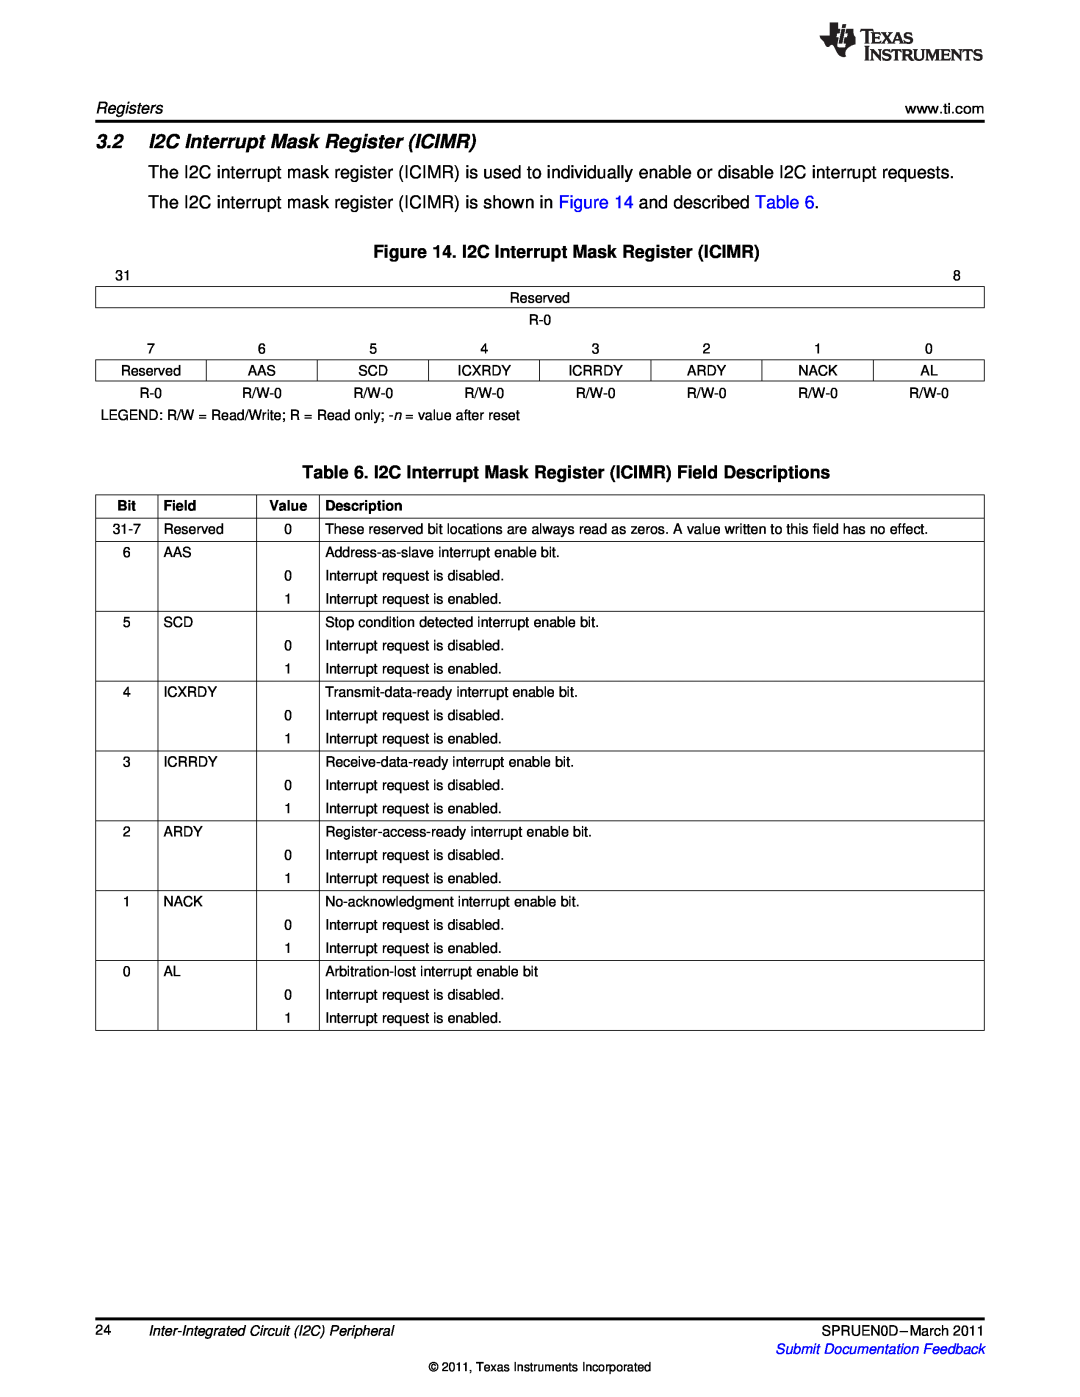 Texas Instruments TMS320C642X manual 3.2I2C Interrupt Mask Register ICIMR, Registers, Field, Value, Description 